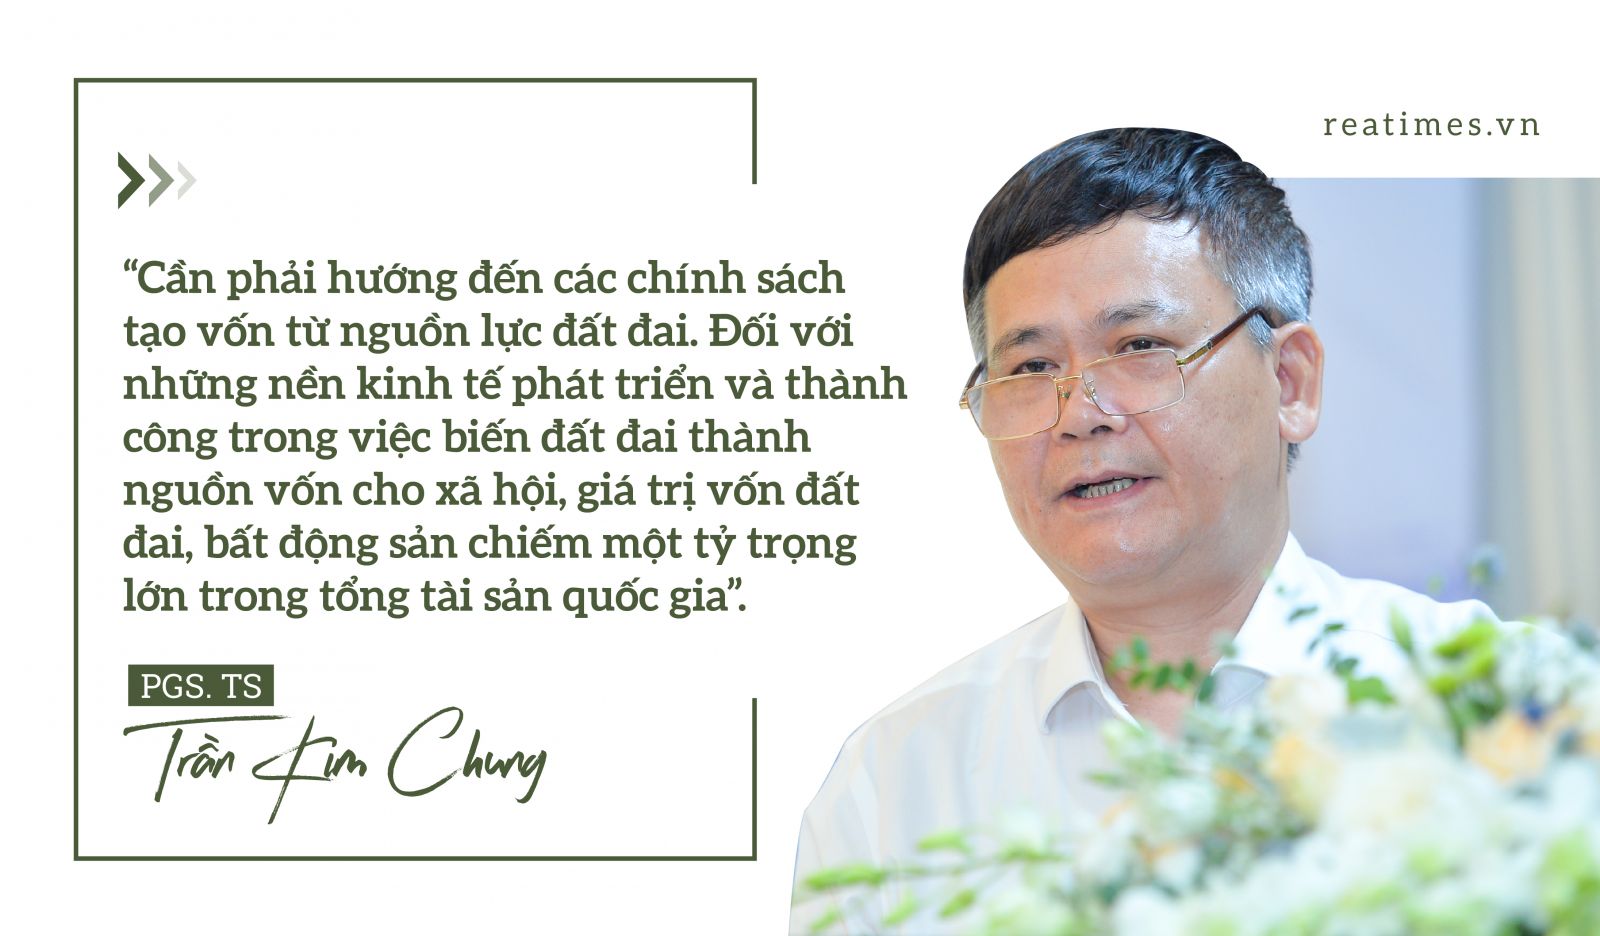 PGS Trần Kim Chung